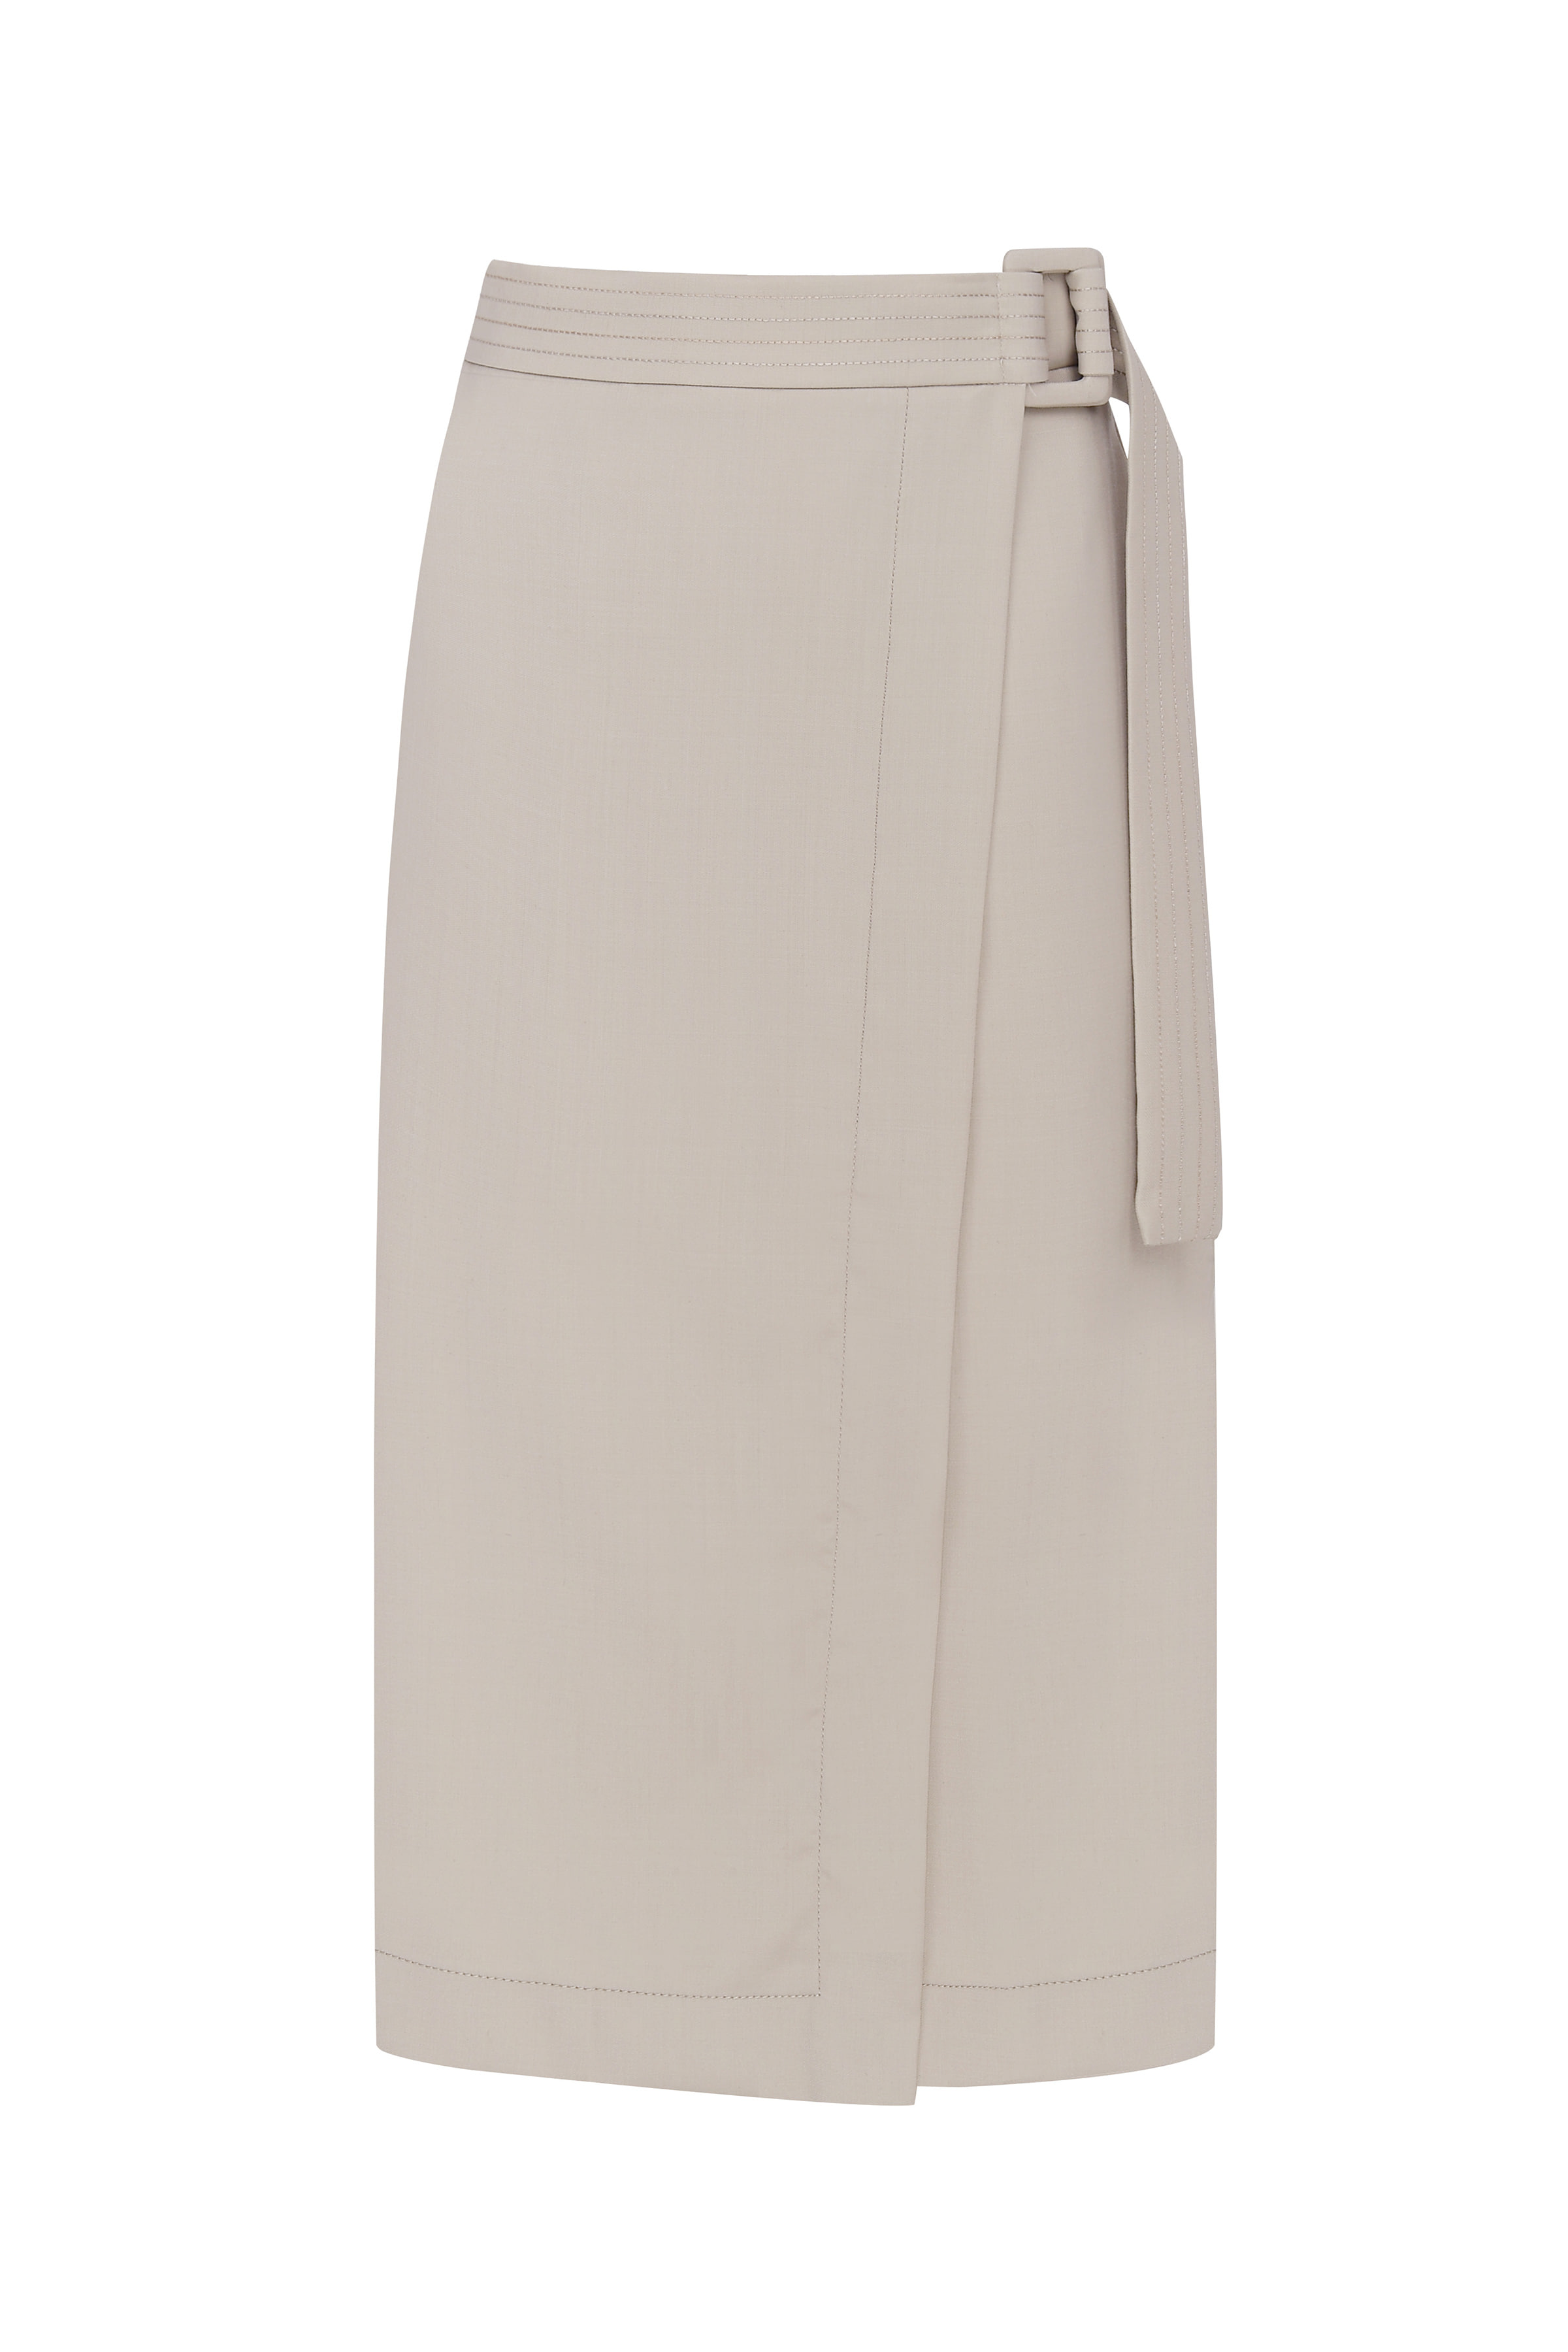 [SAMPLE][박하나 착용]Wool Stitch lap skirt-Beige